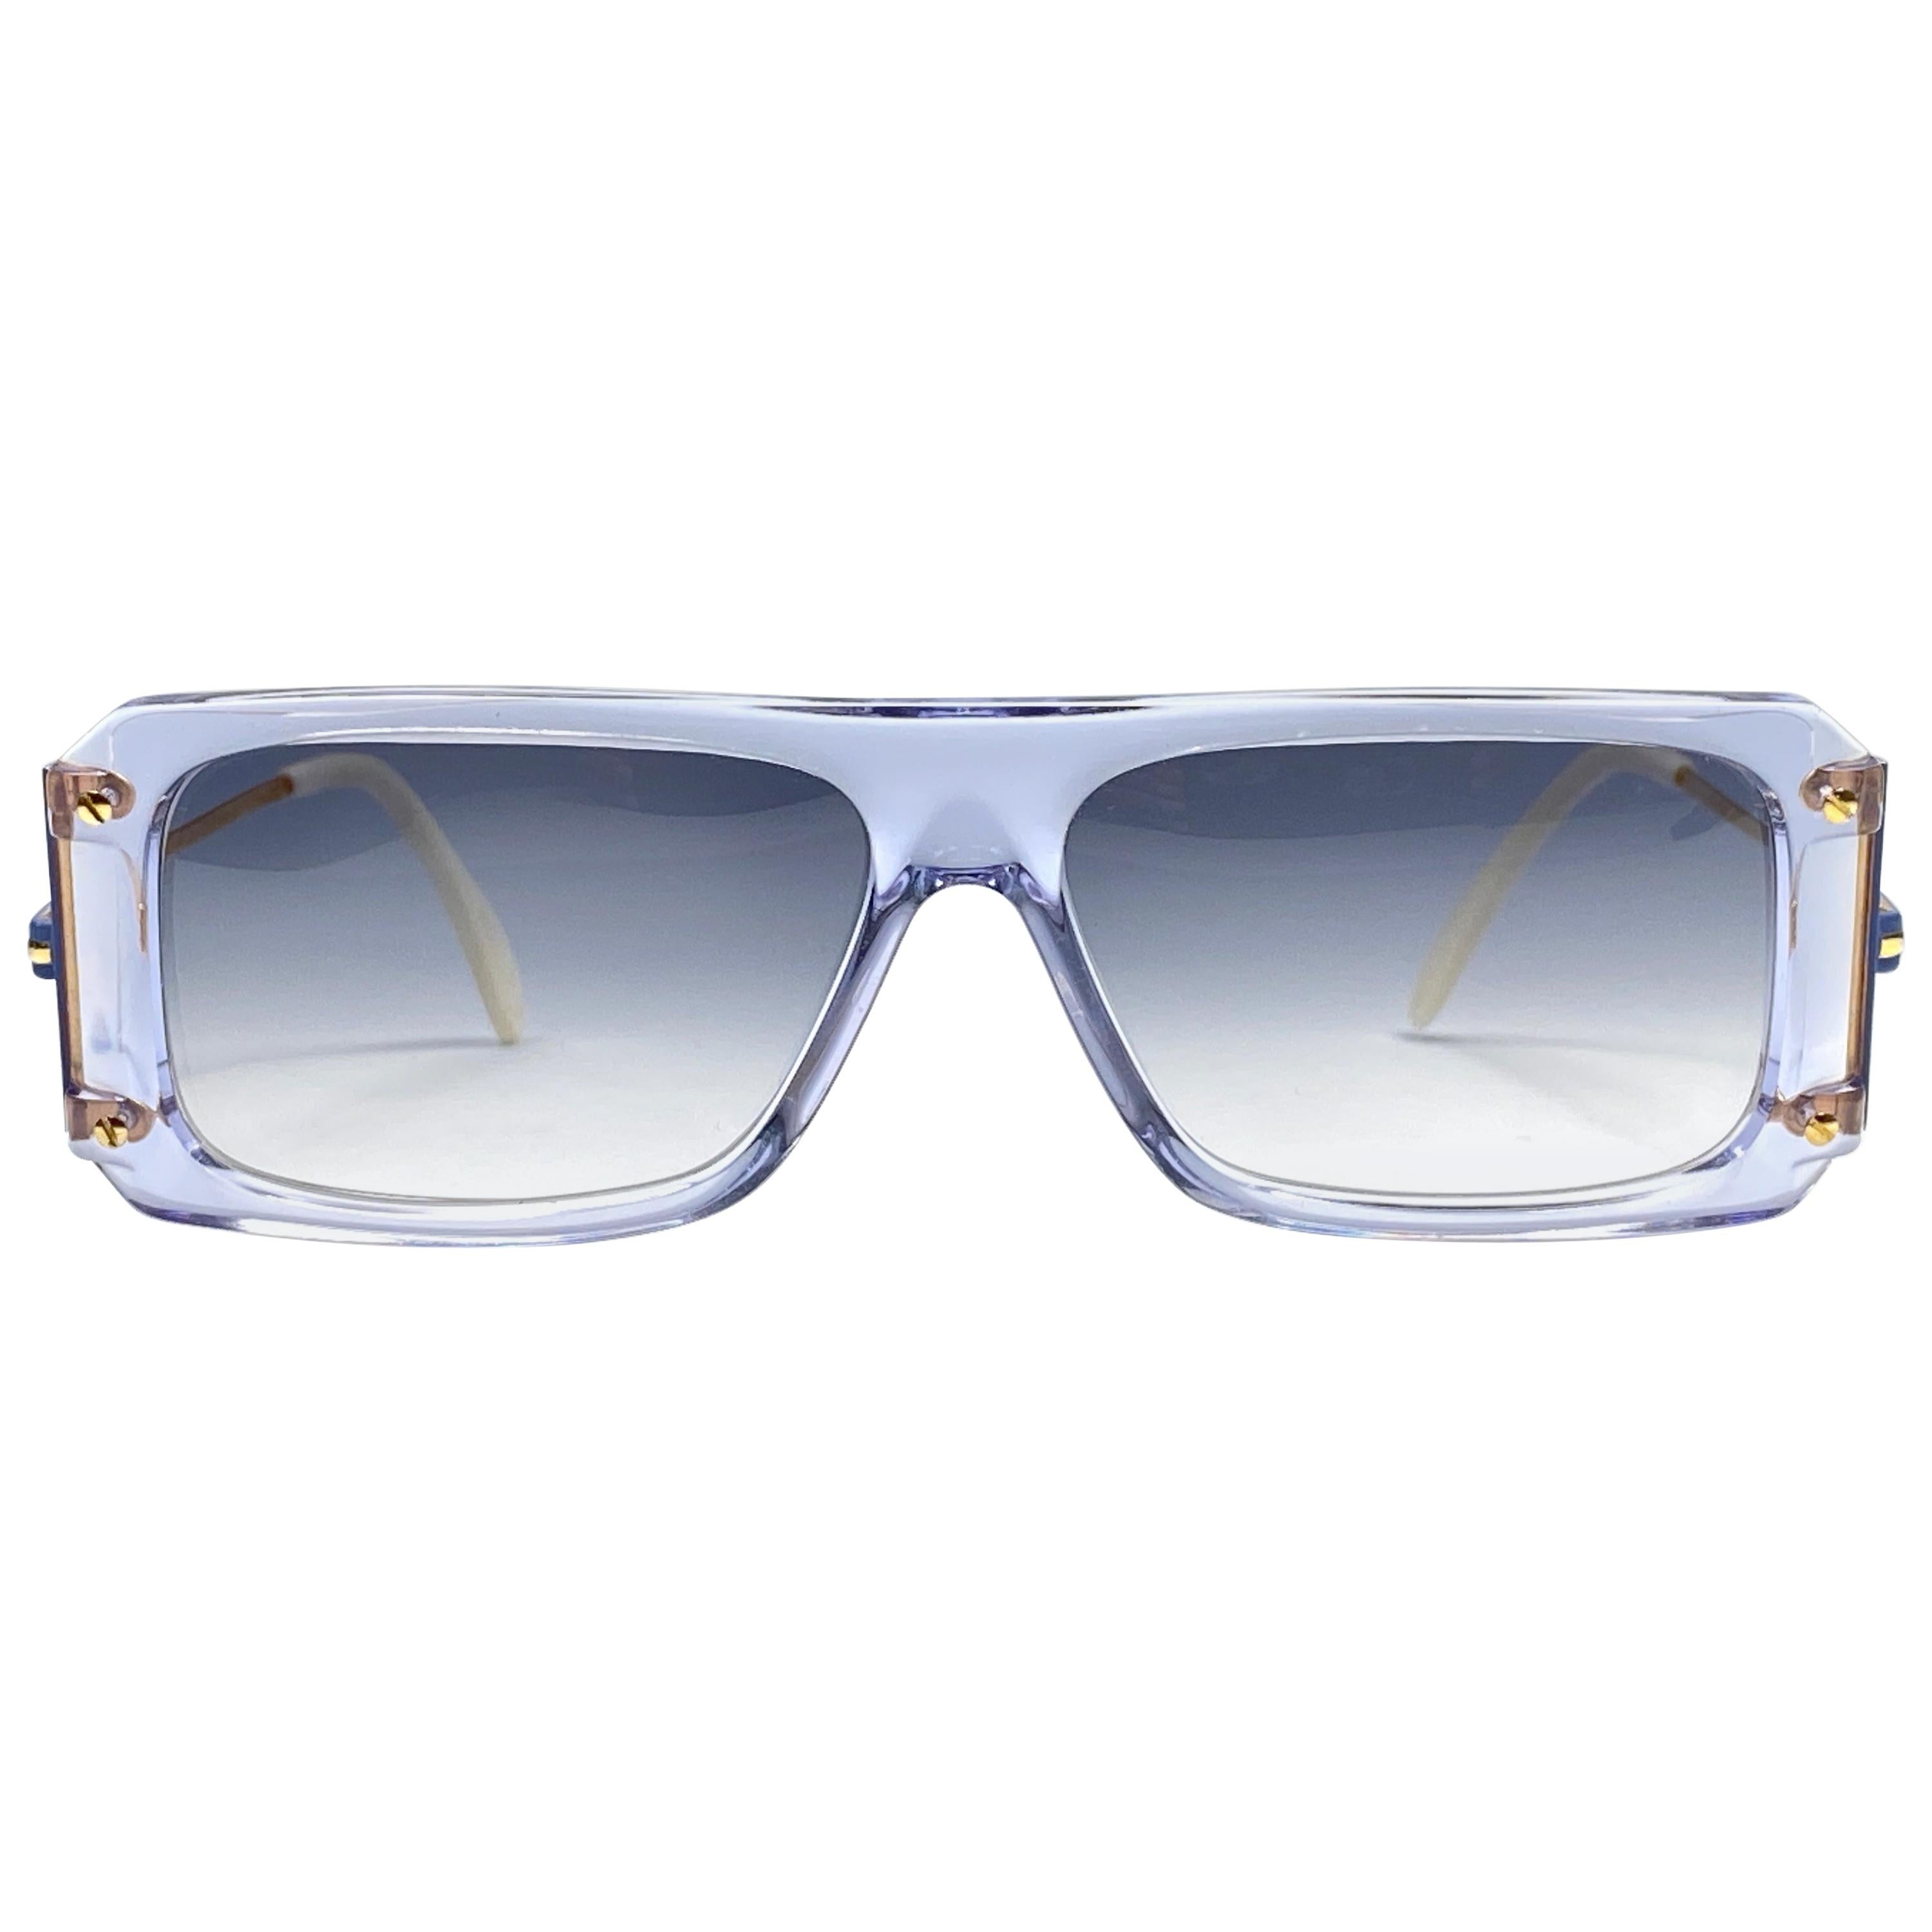 New Vintage Cazal 185 Translucent Blue Frame 1980's Sunglasses